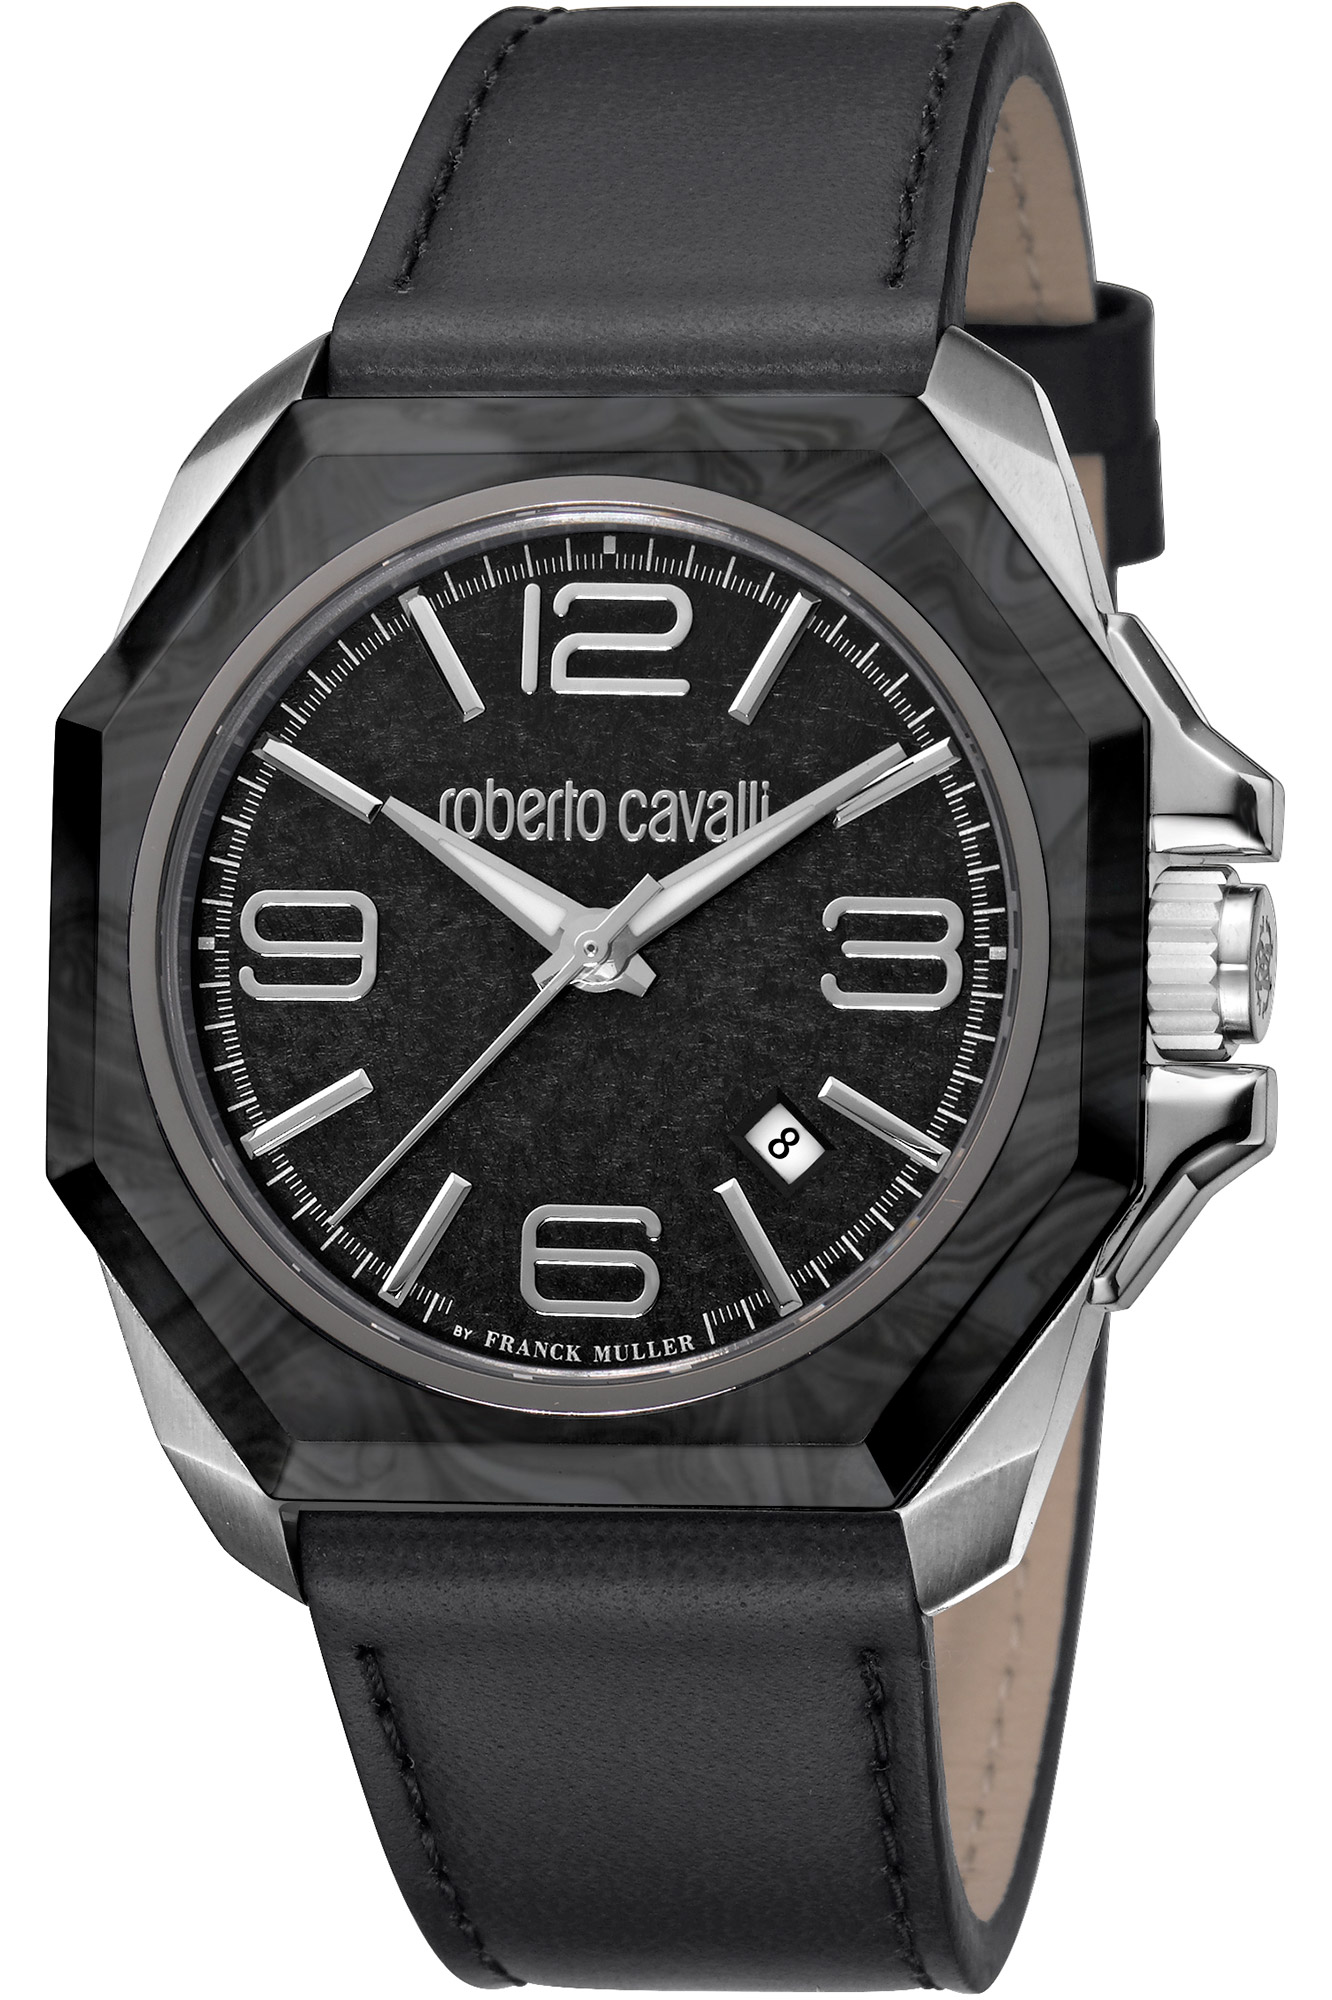 Watch Roberto Cavalli by Franck Muller rv1g076l0051